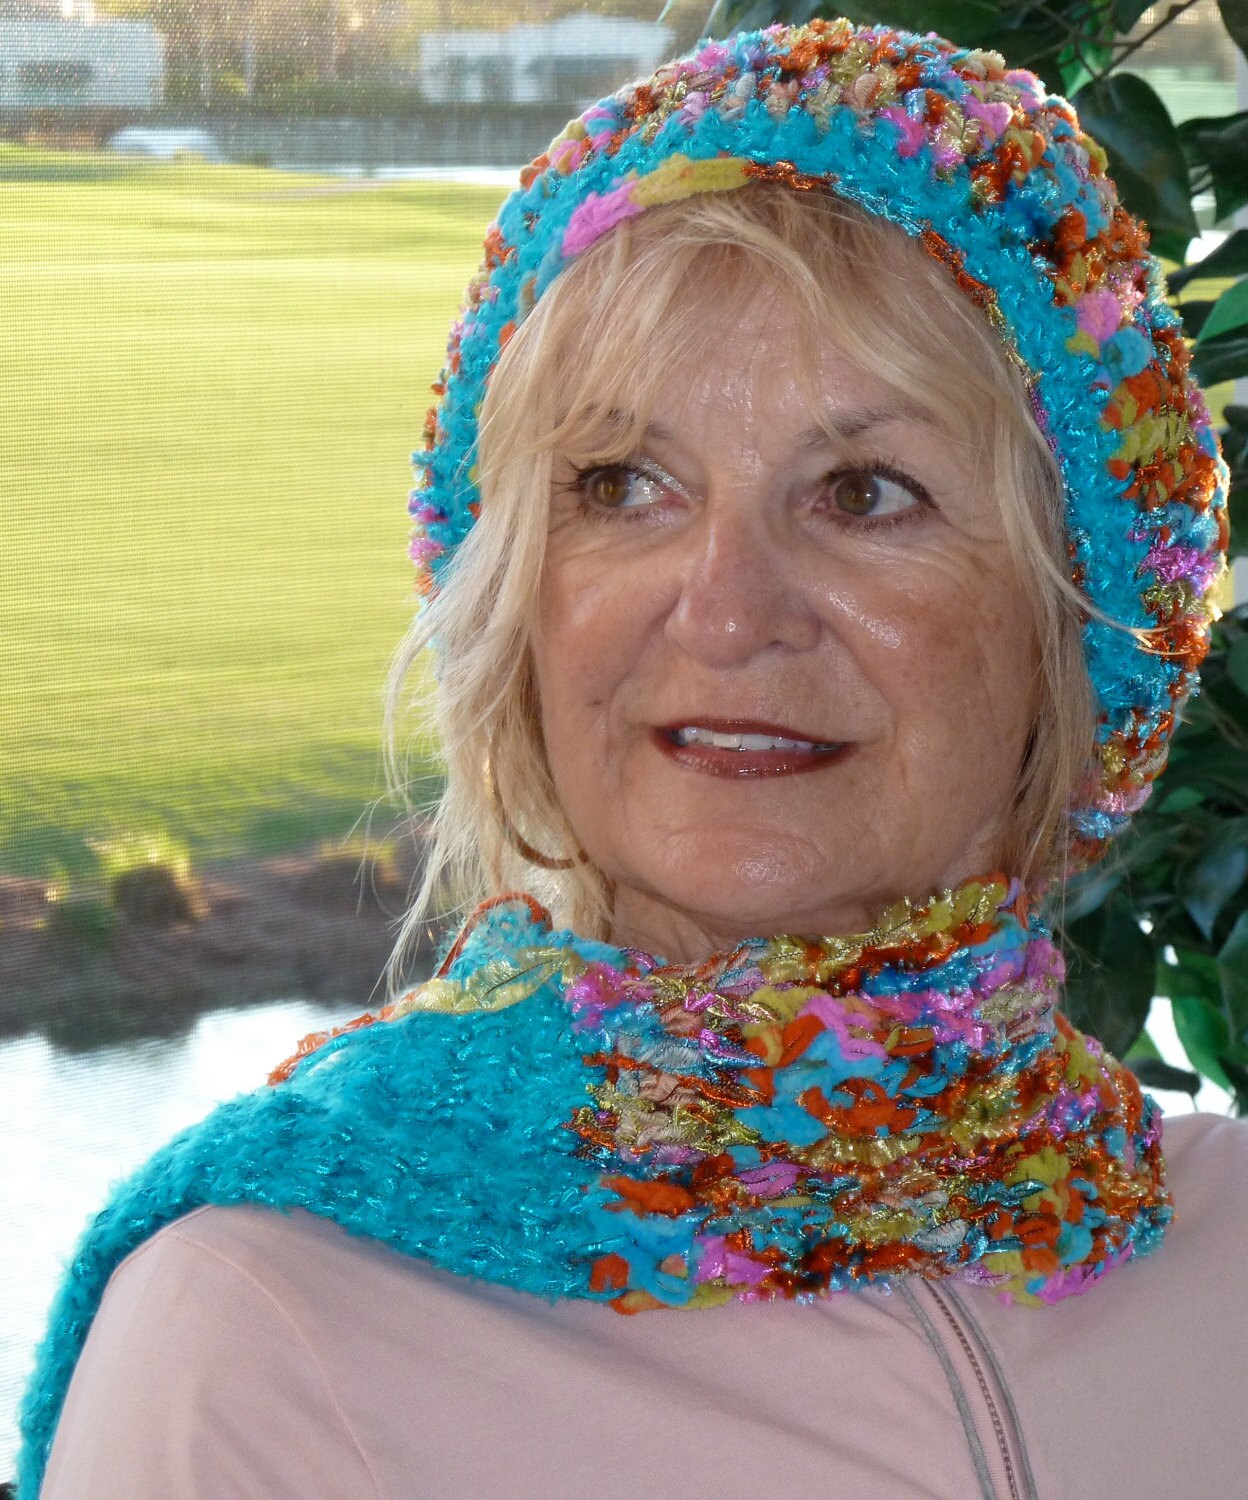 Bohemian accessories crochet hat scarf handmade crochet hat | Etsy